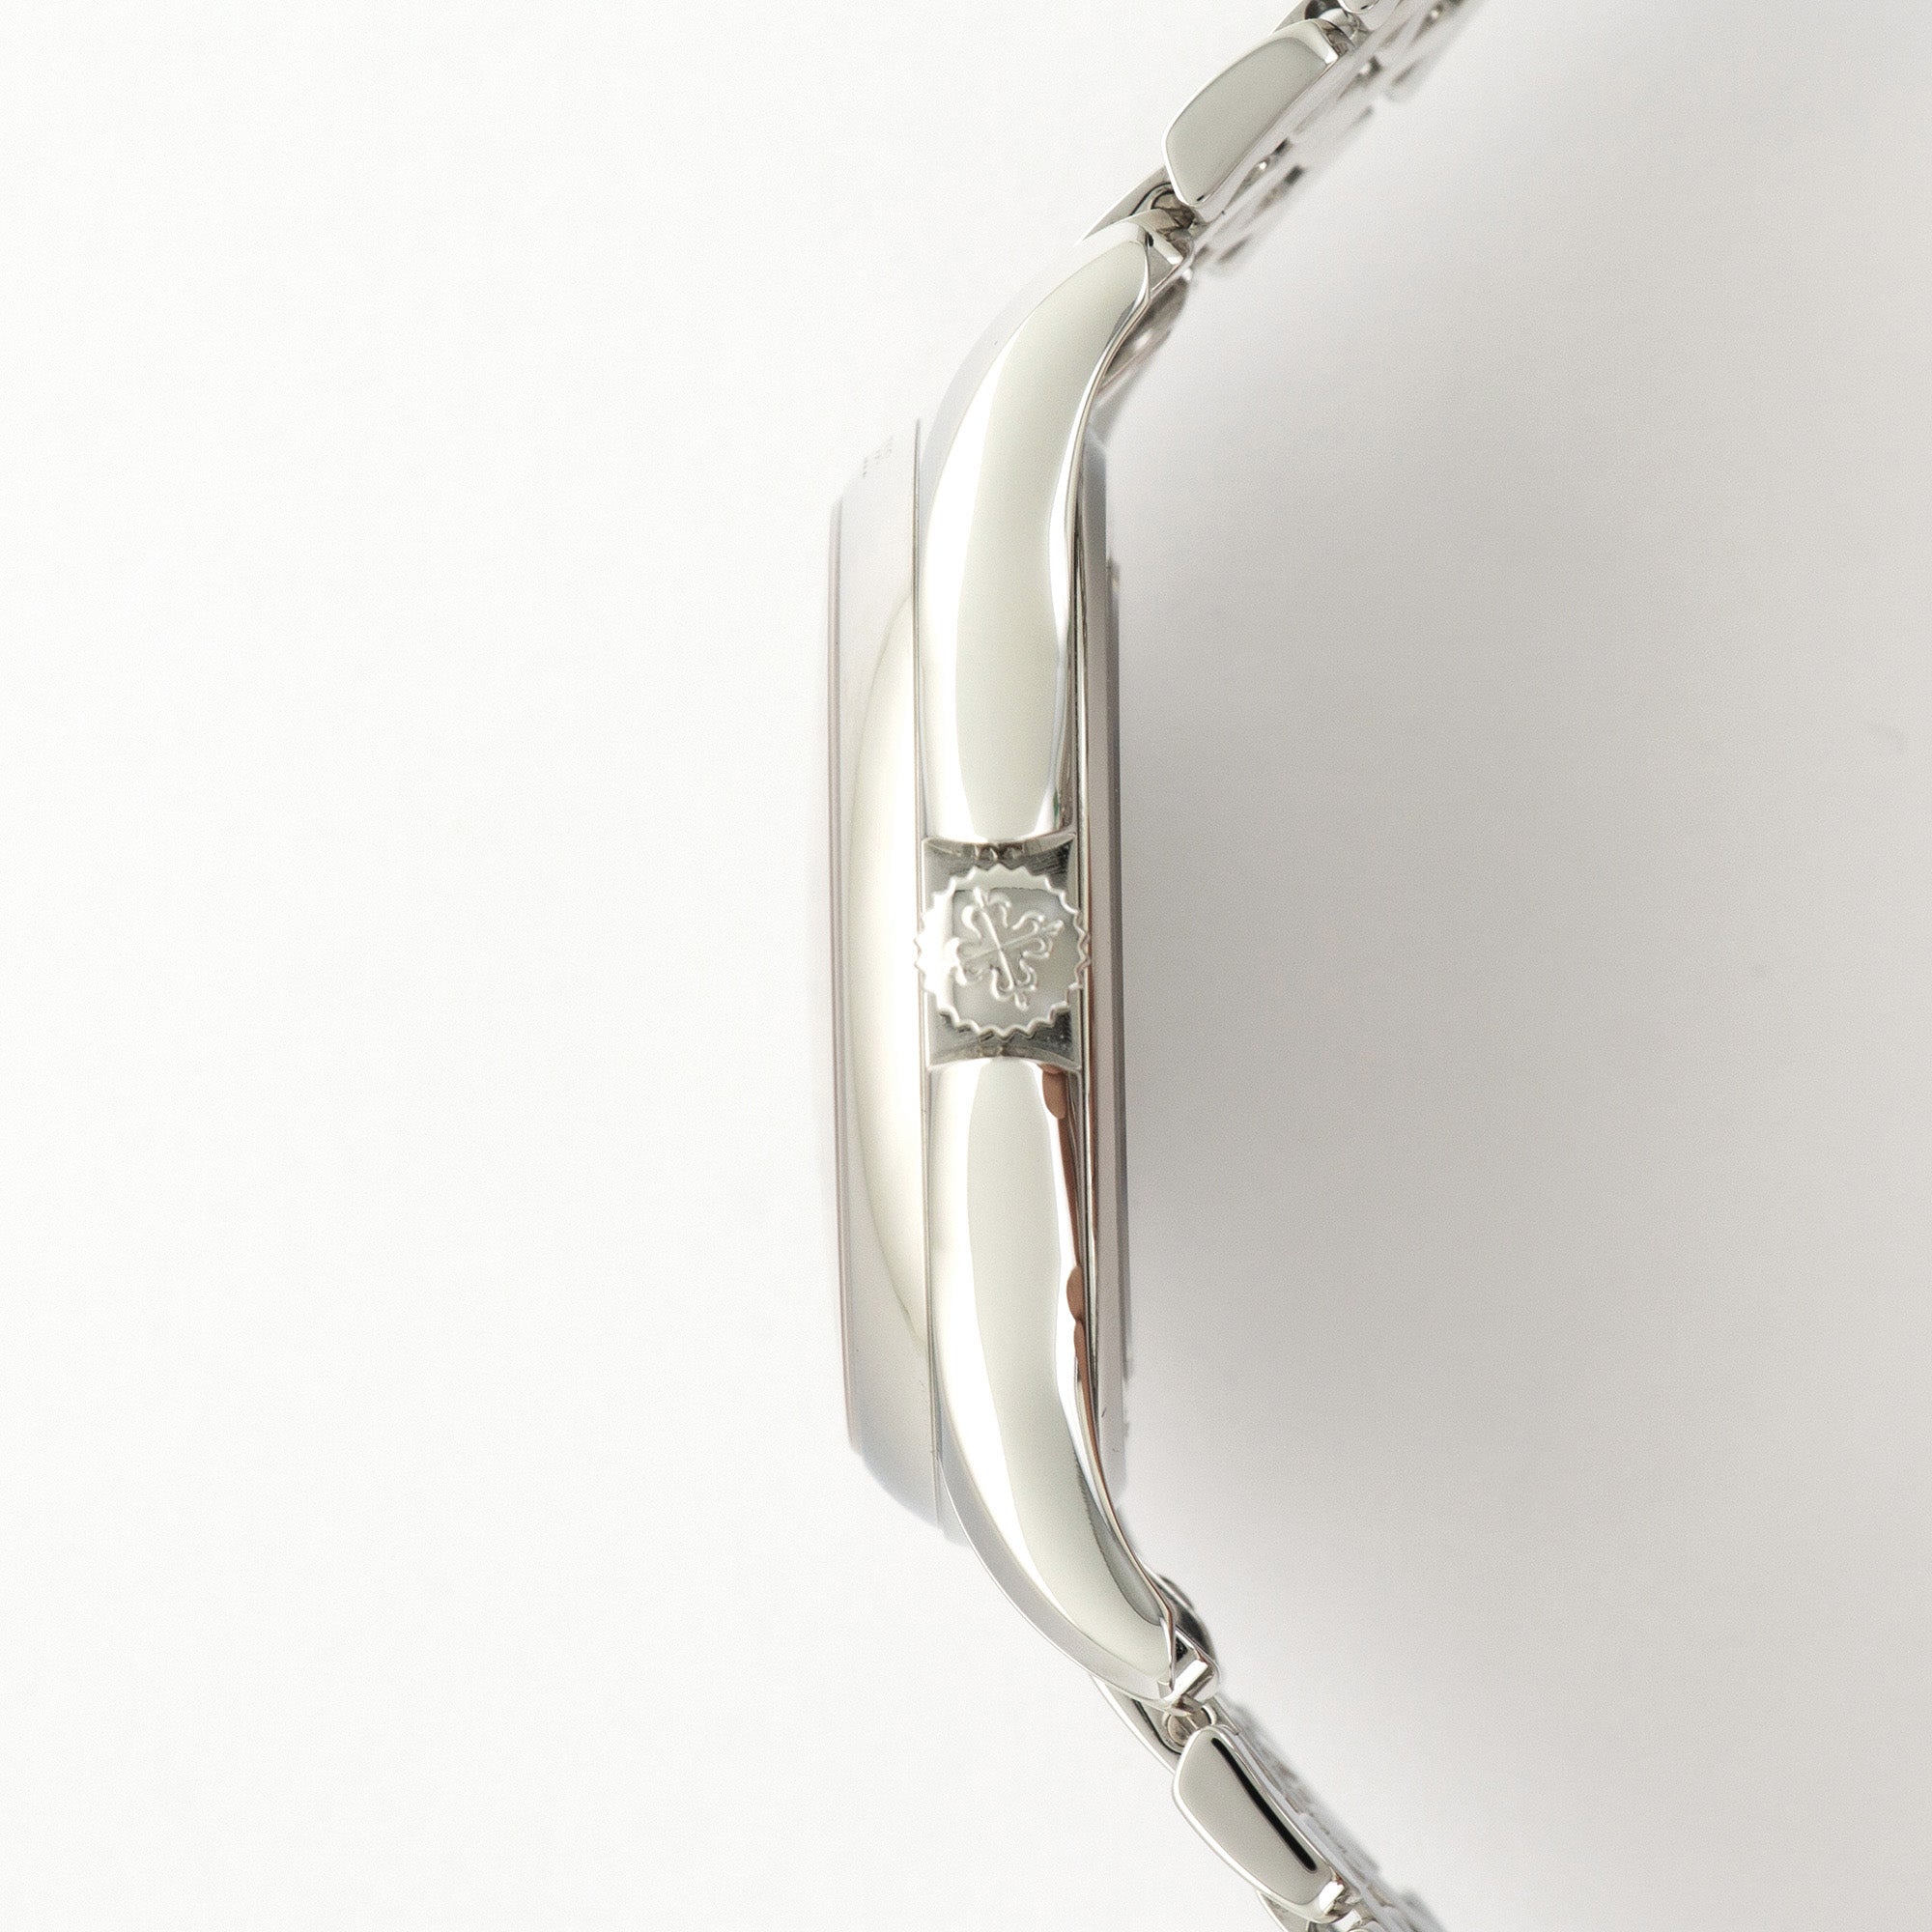 Patek Philippe Platinum World Time Cloisonne Watch Ref. 5131